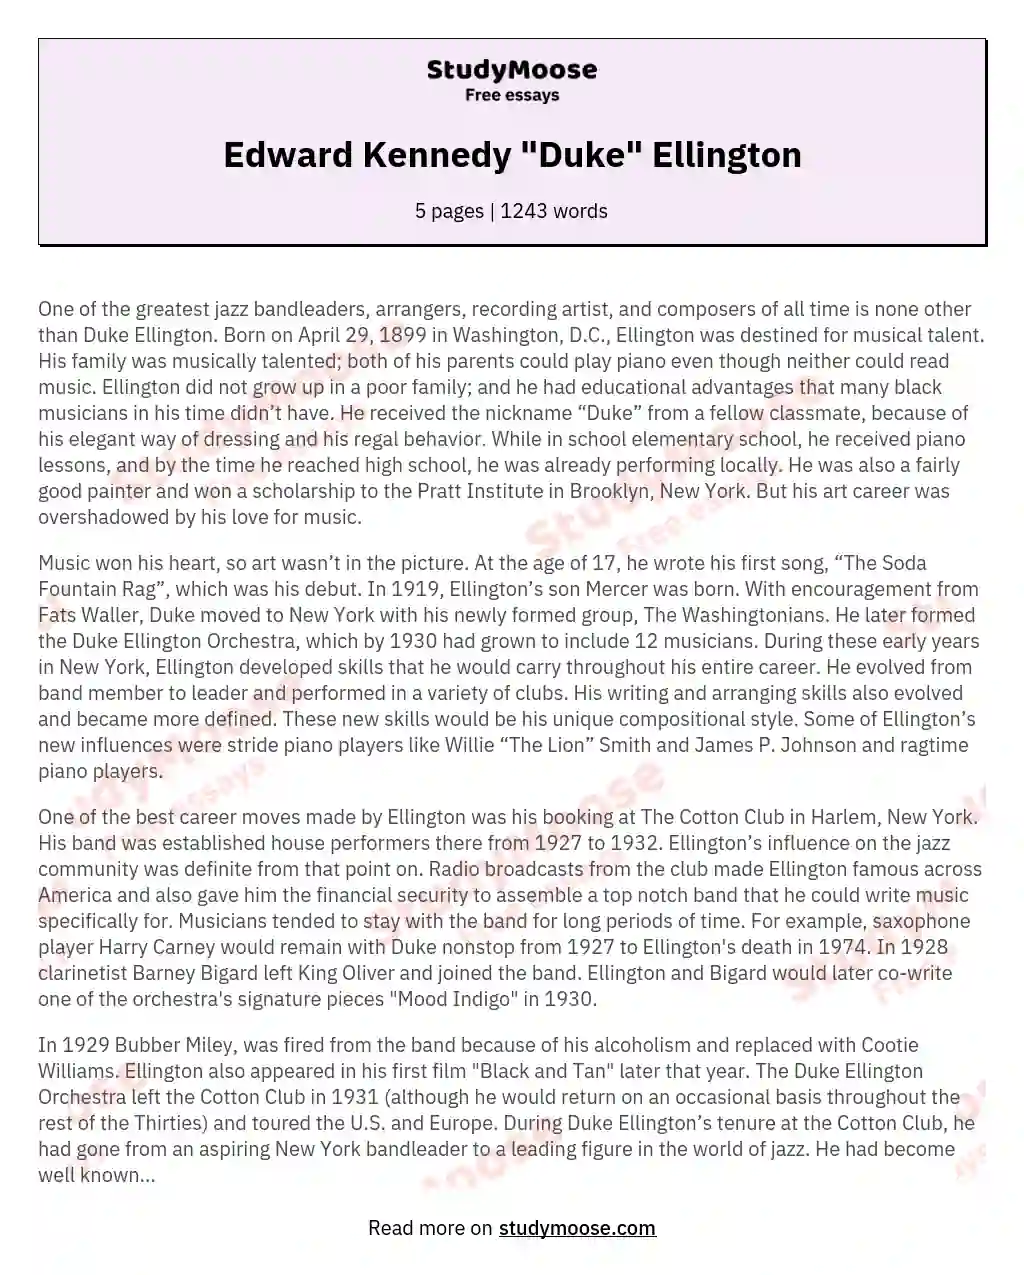 Edward Kennedy "Duke" Ellington